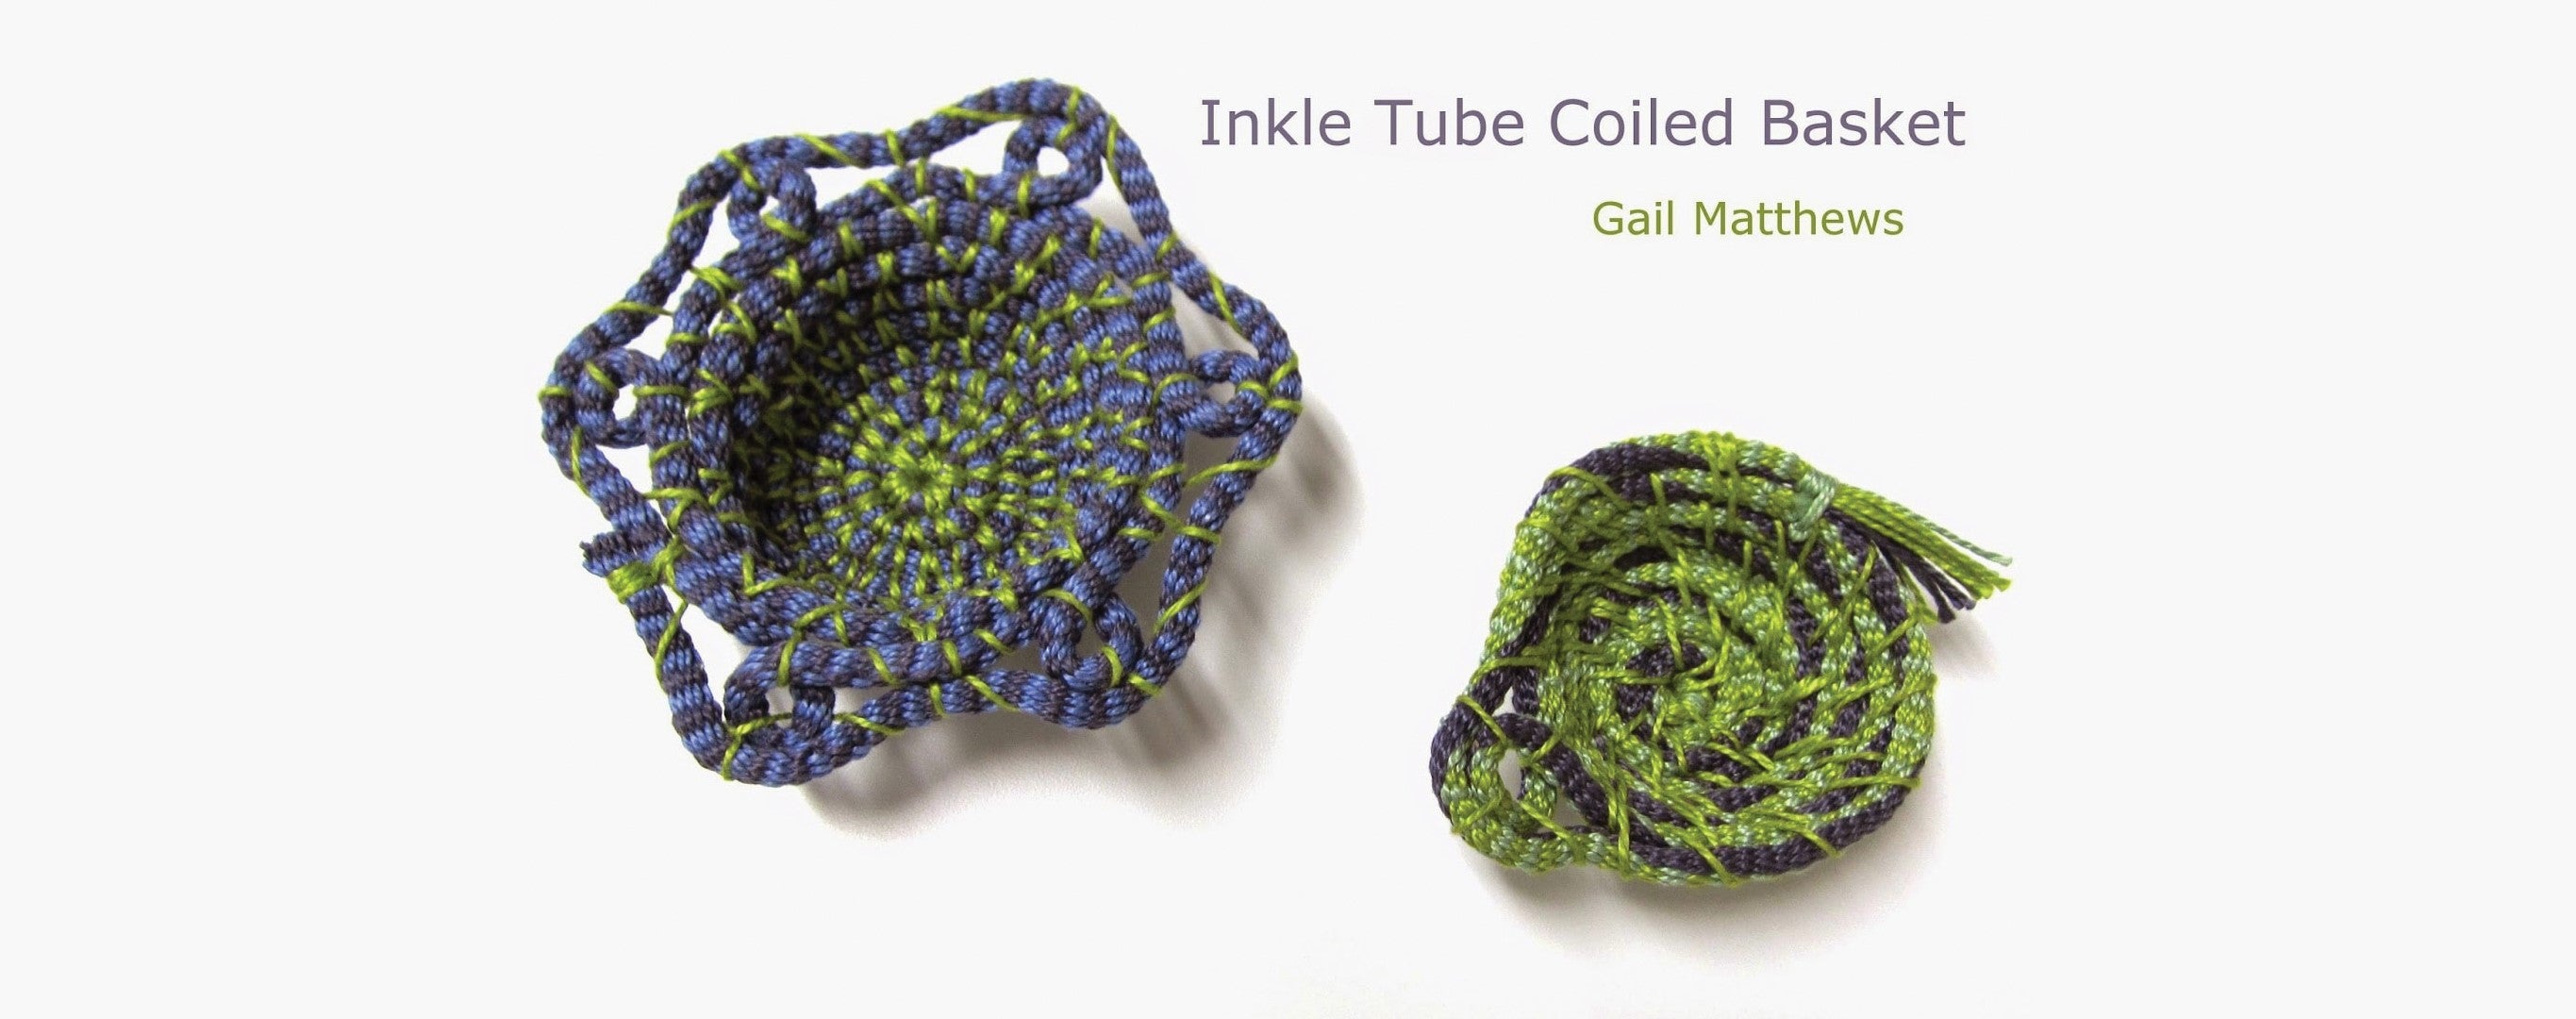 Inkle Tube Coiled Basket